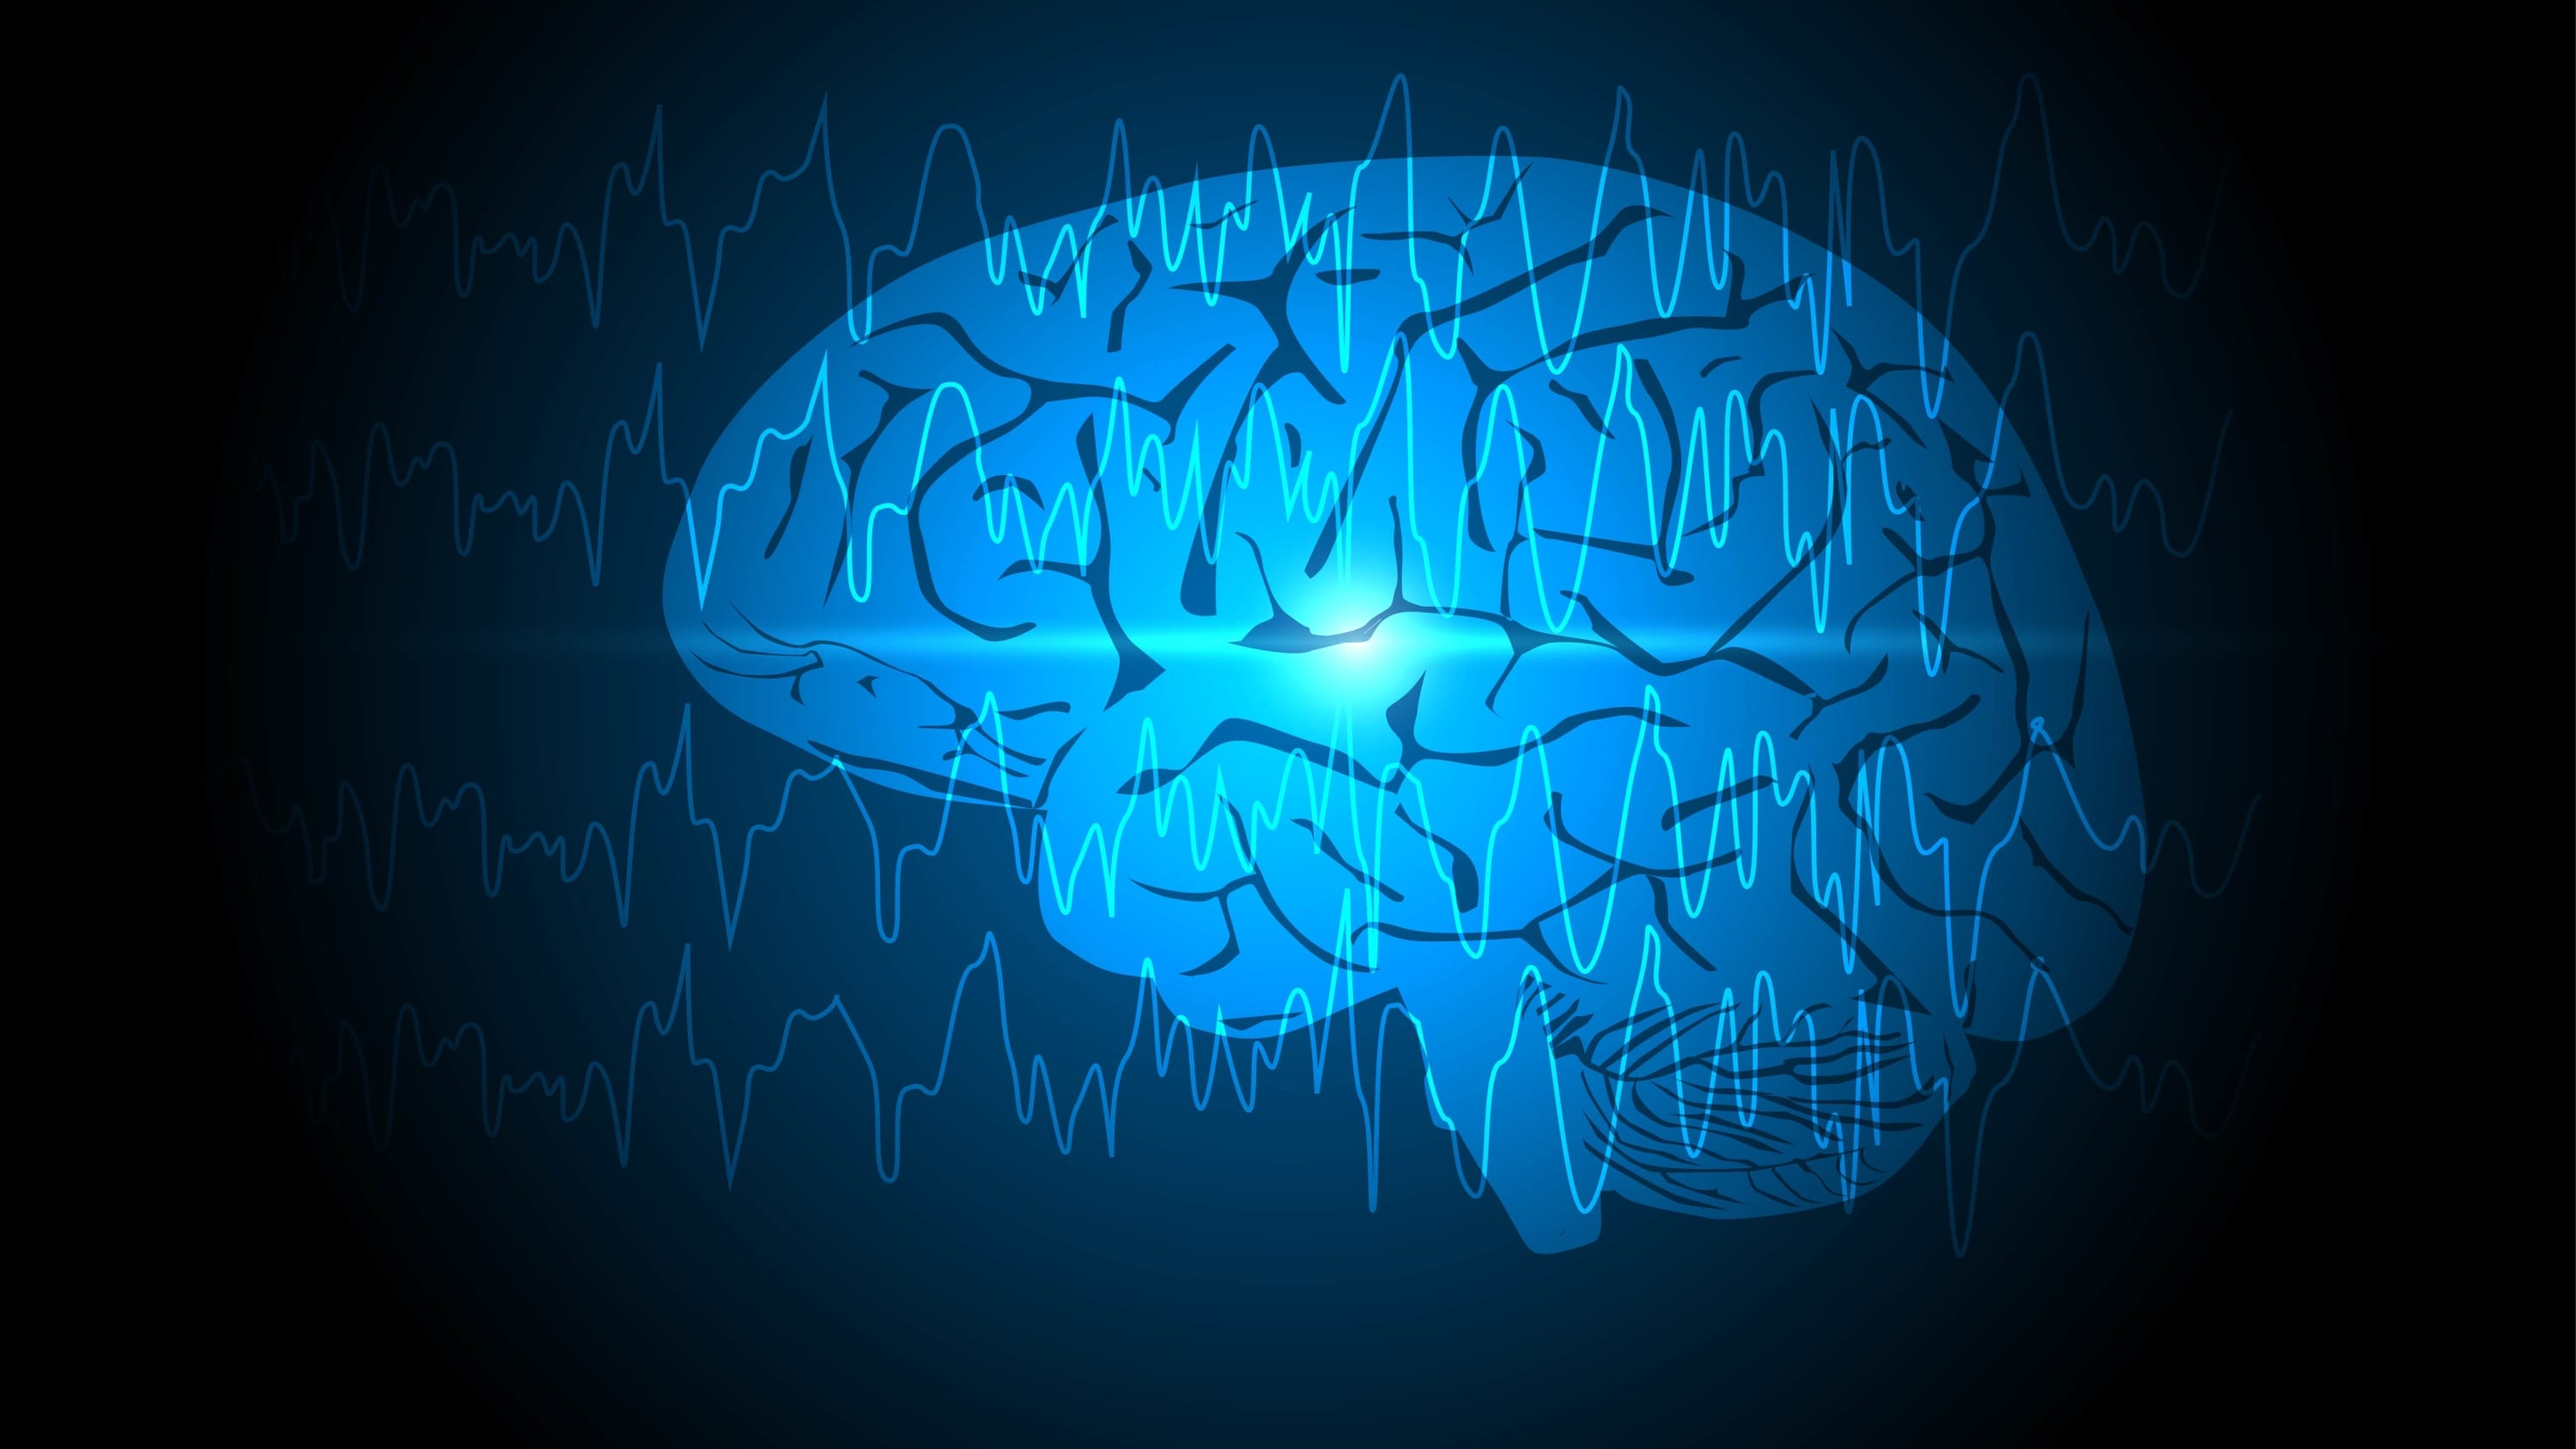 Abnormal brain waves or EEG arising from one region of the brain, representing epilepsy or seizures